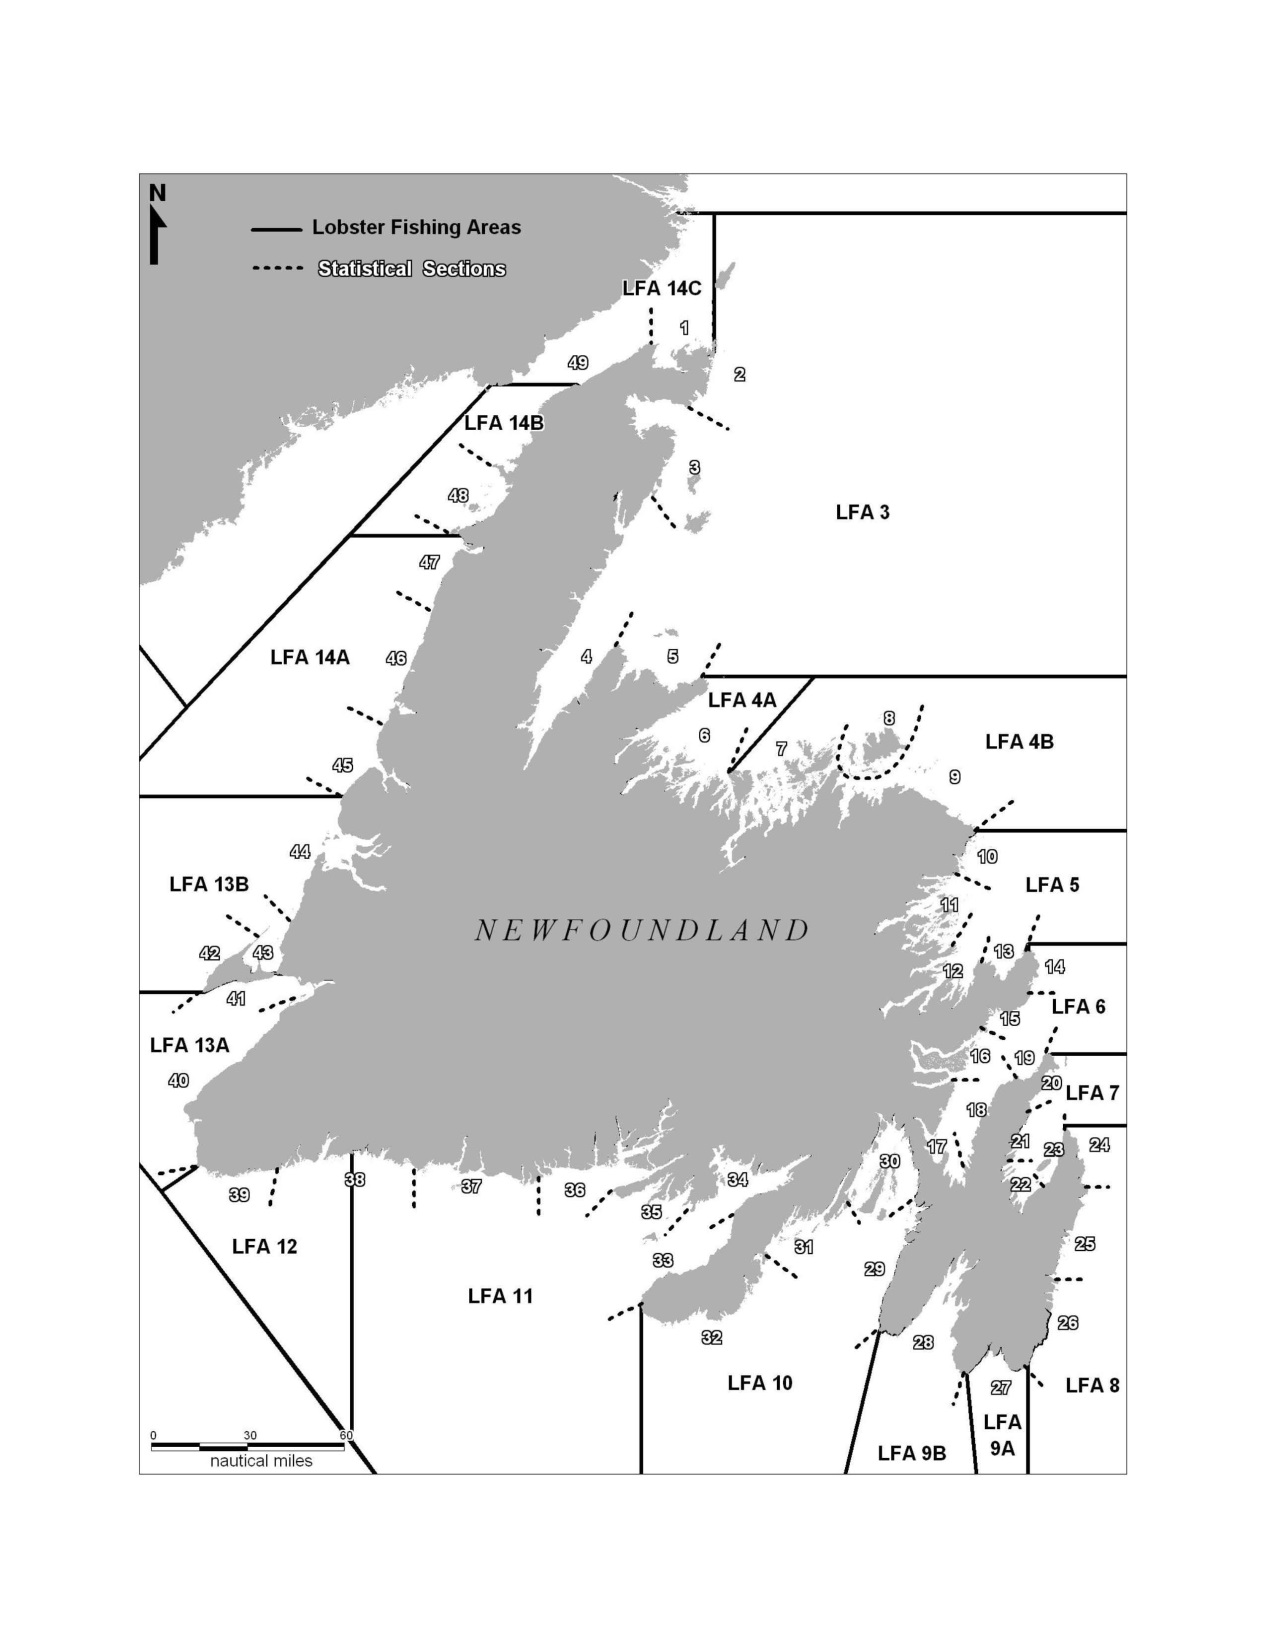 map pf lobster fishing area, NL region